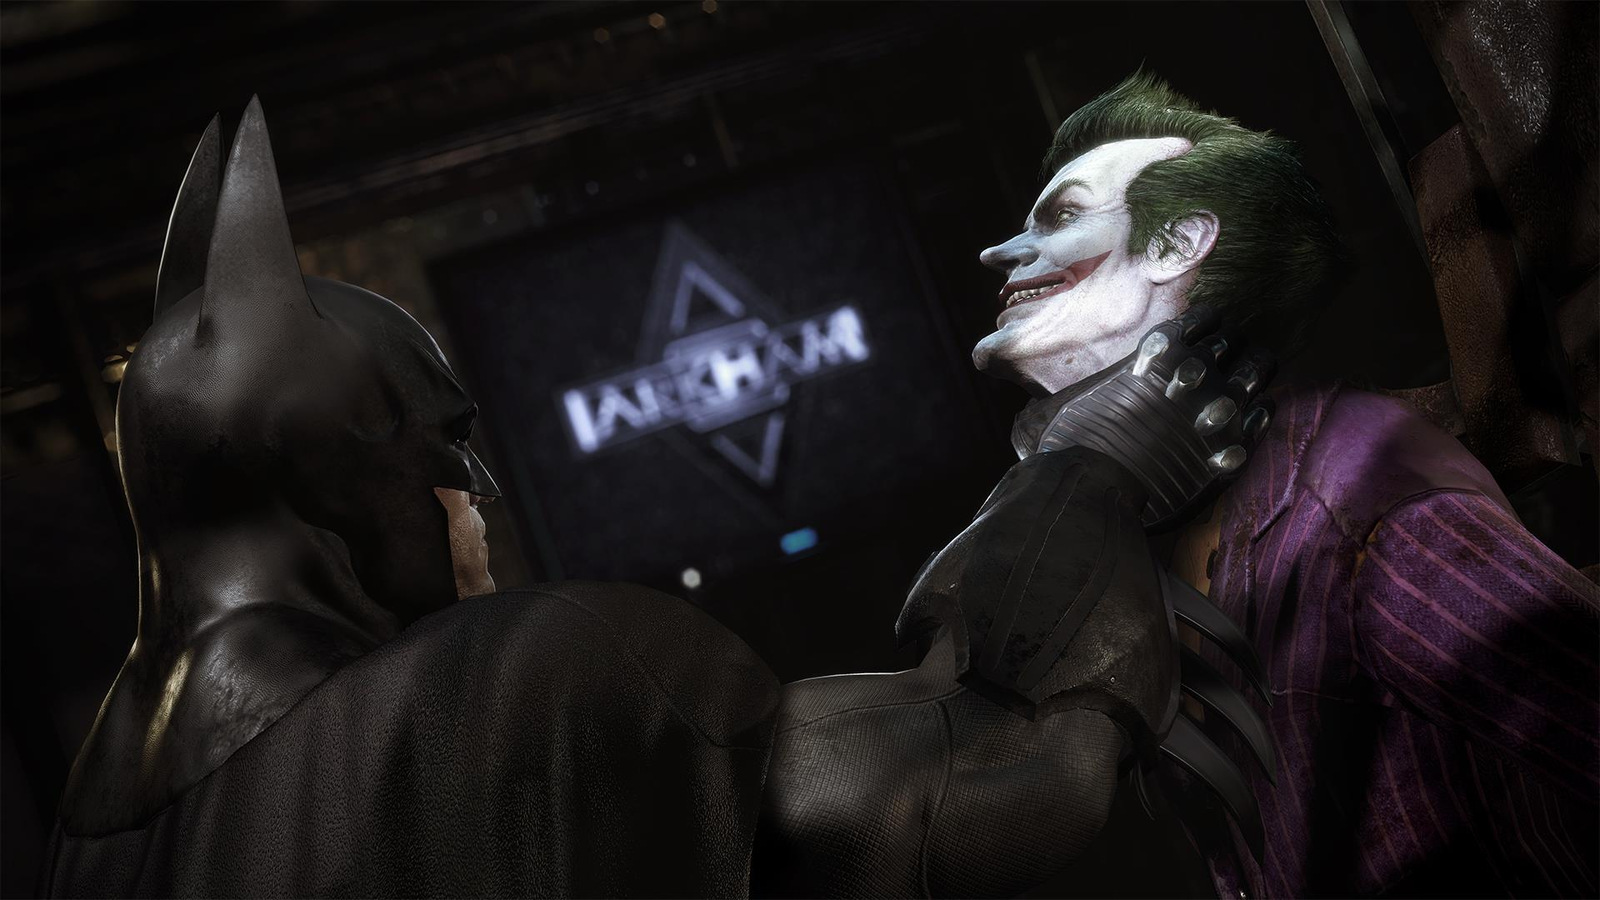 Batman: Arkham City remaster has unlocked frame-rate, but PS4